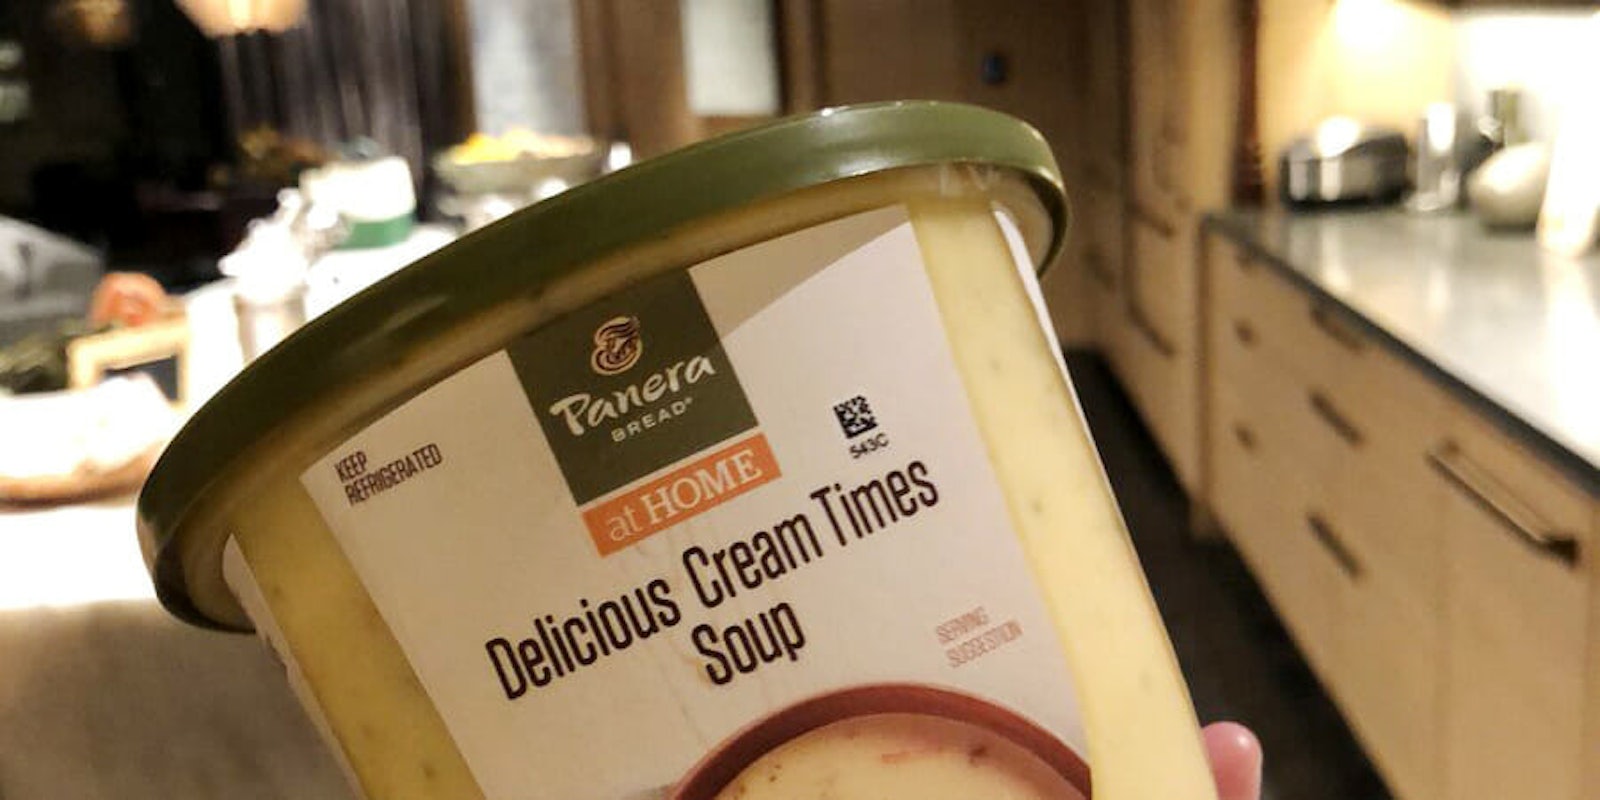 delicious cream times soup